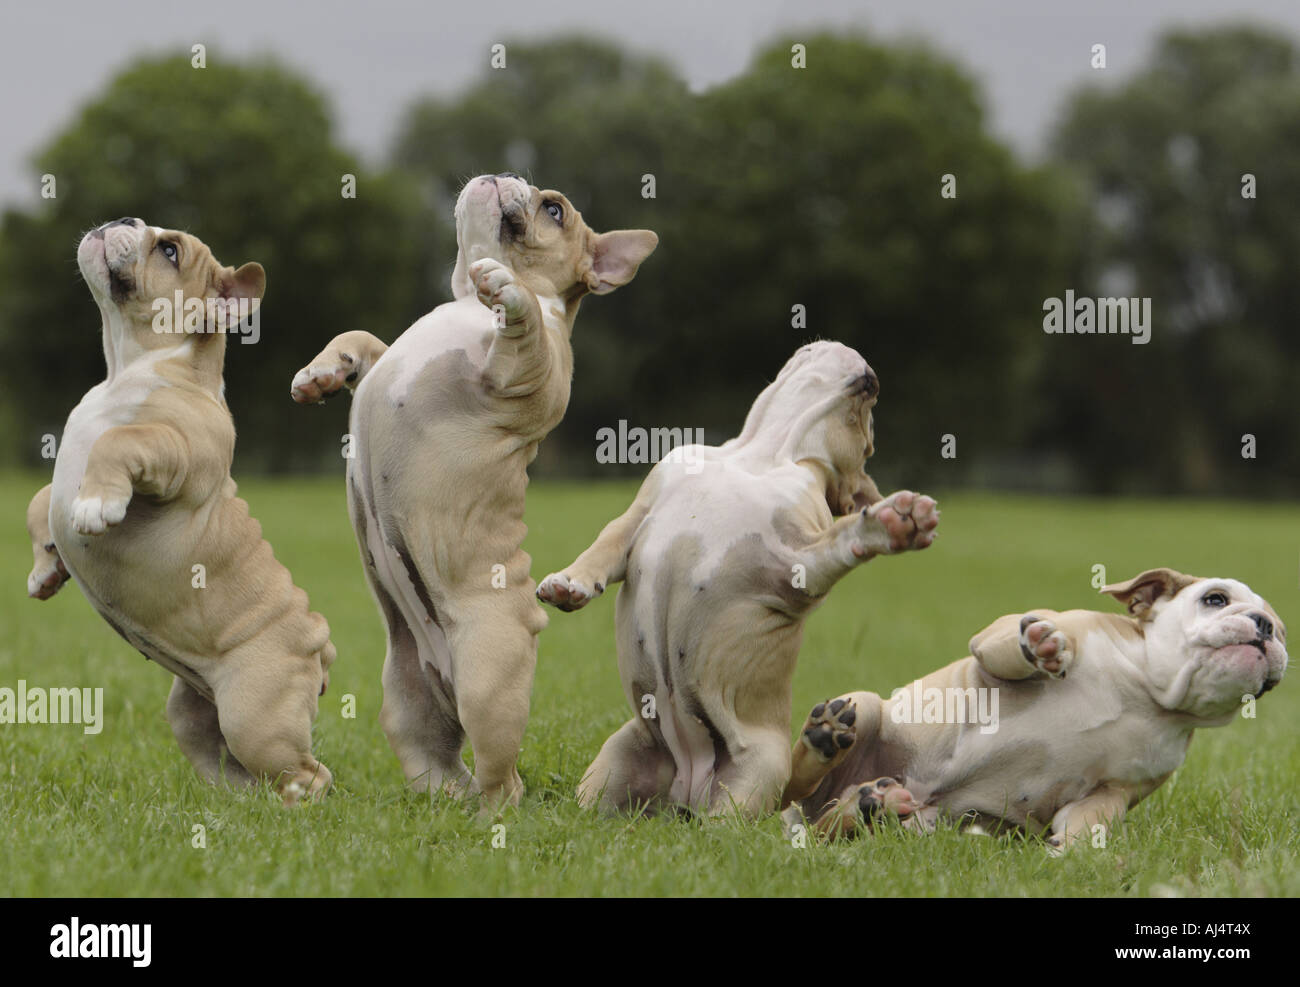 12 Week old English Bulldog puppy Digital composite Stock Photo